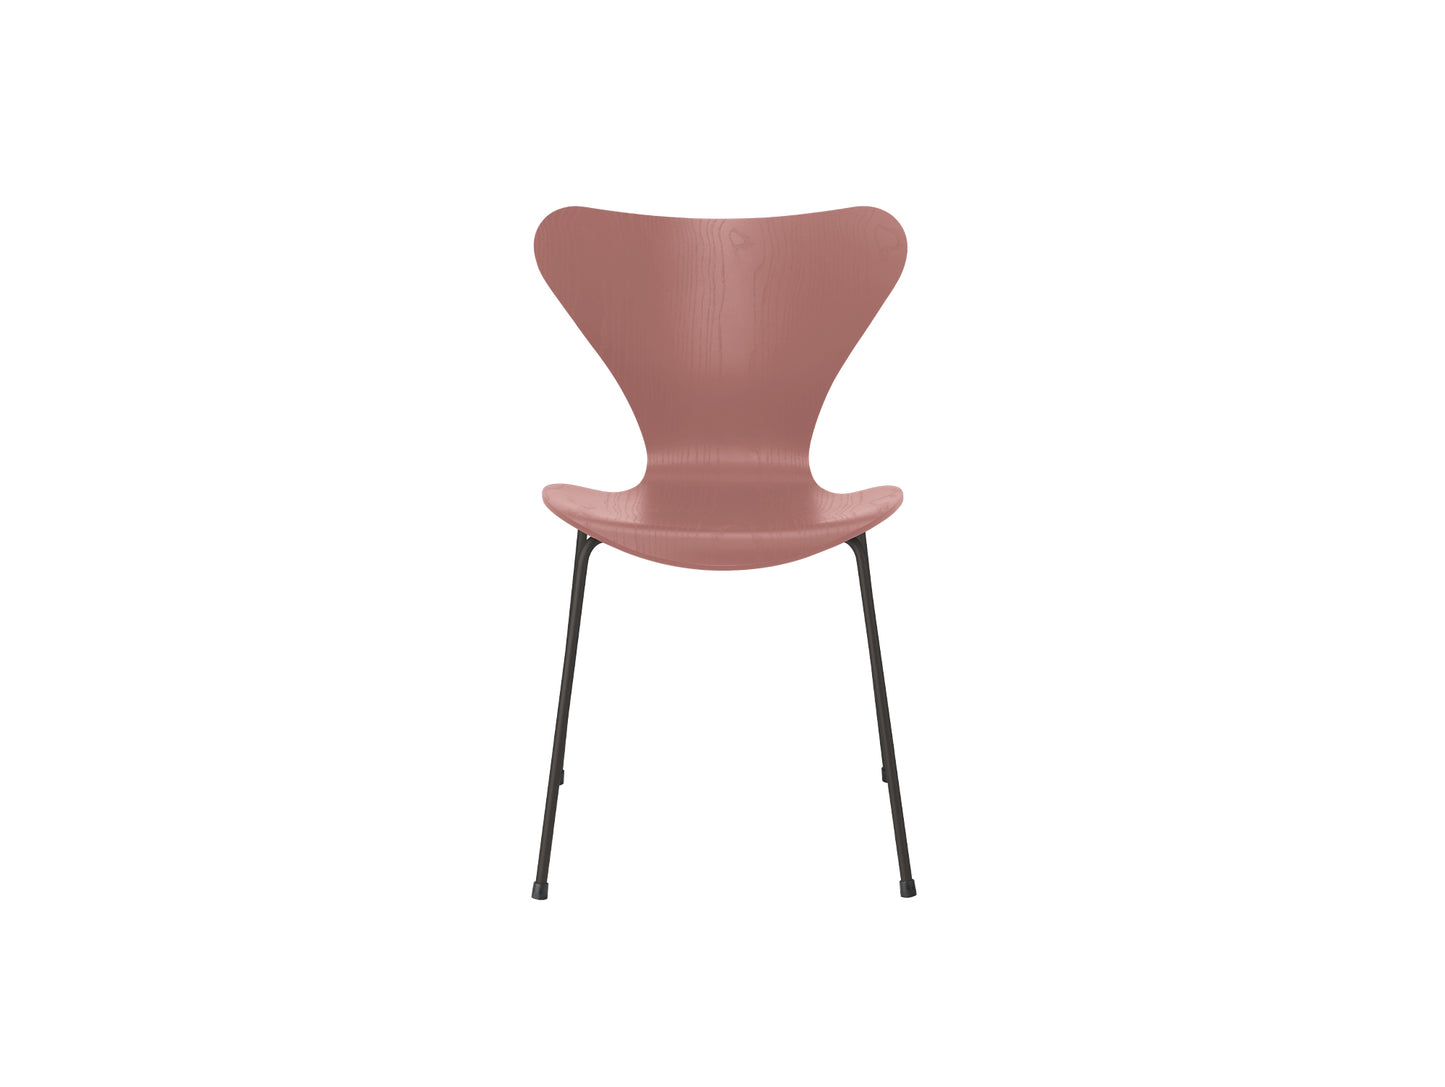 Series 7™ 3107 Dining Chair by Fritz Hansen - Wild Rose Coloured Ash Veneer Shell / Warm Graphite Steel